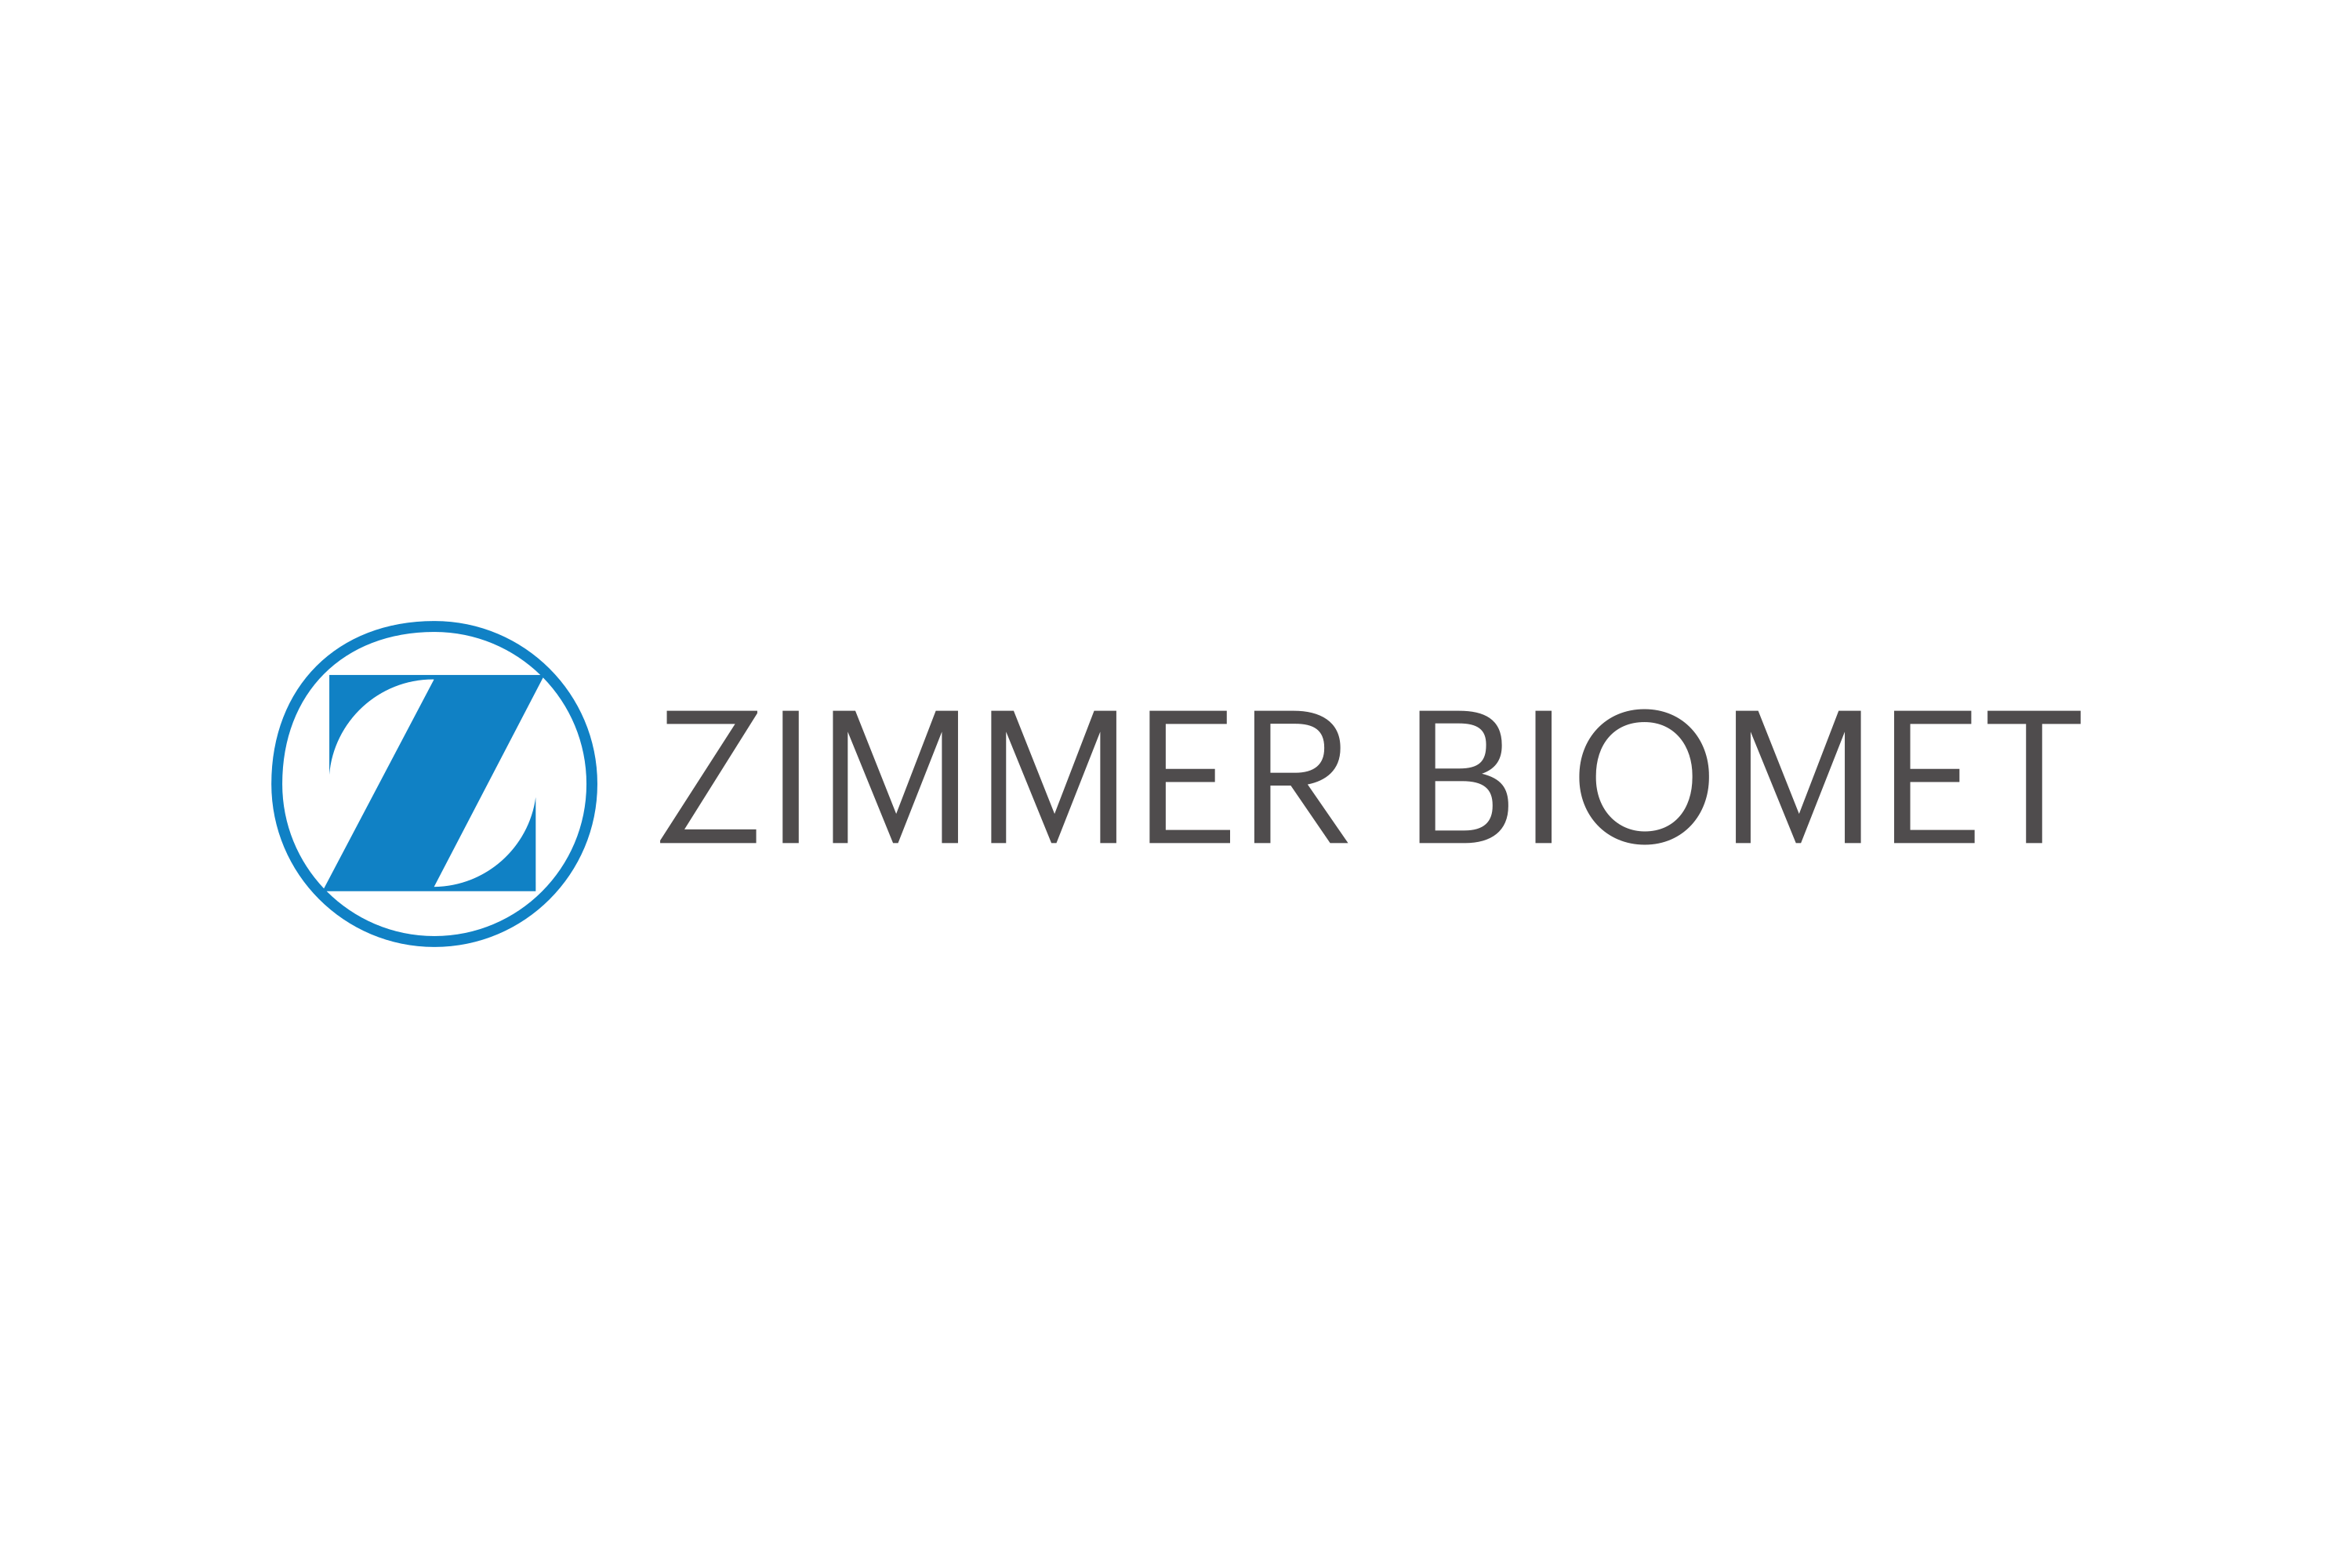 zimmer biomet company presentation